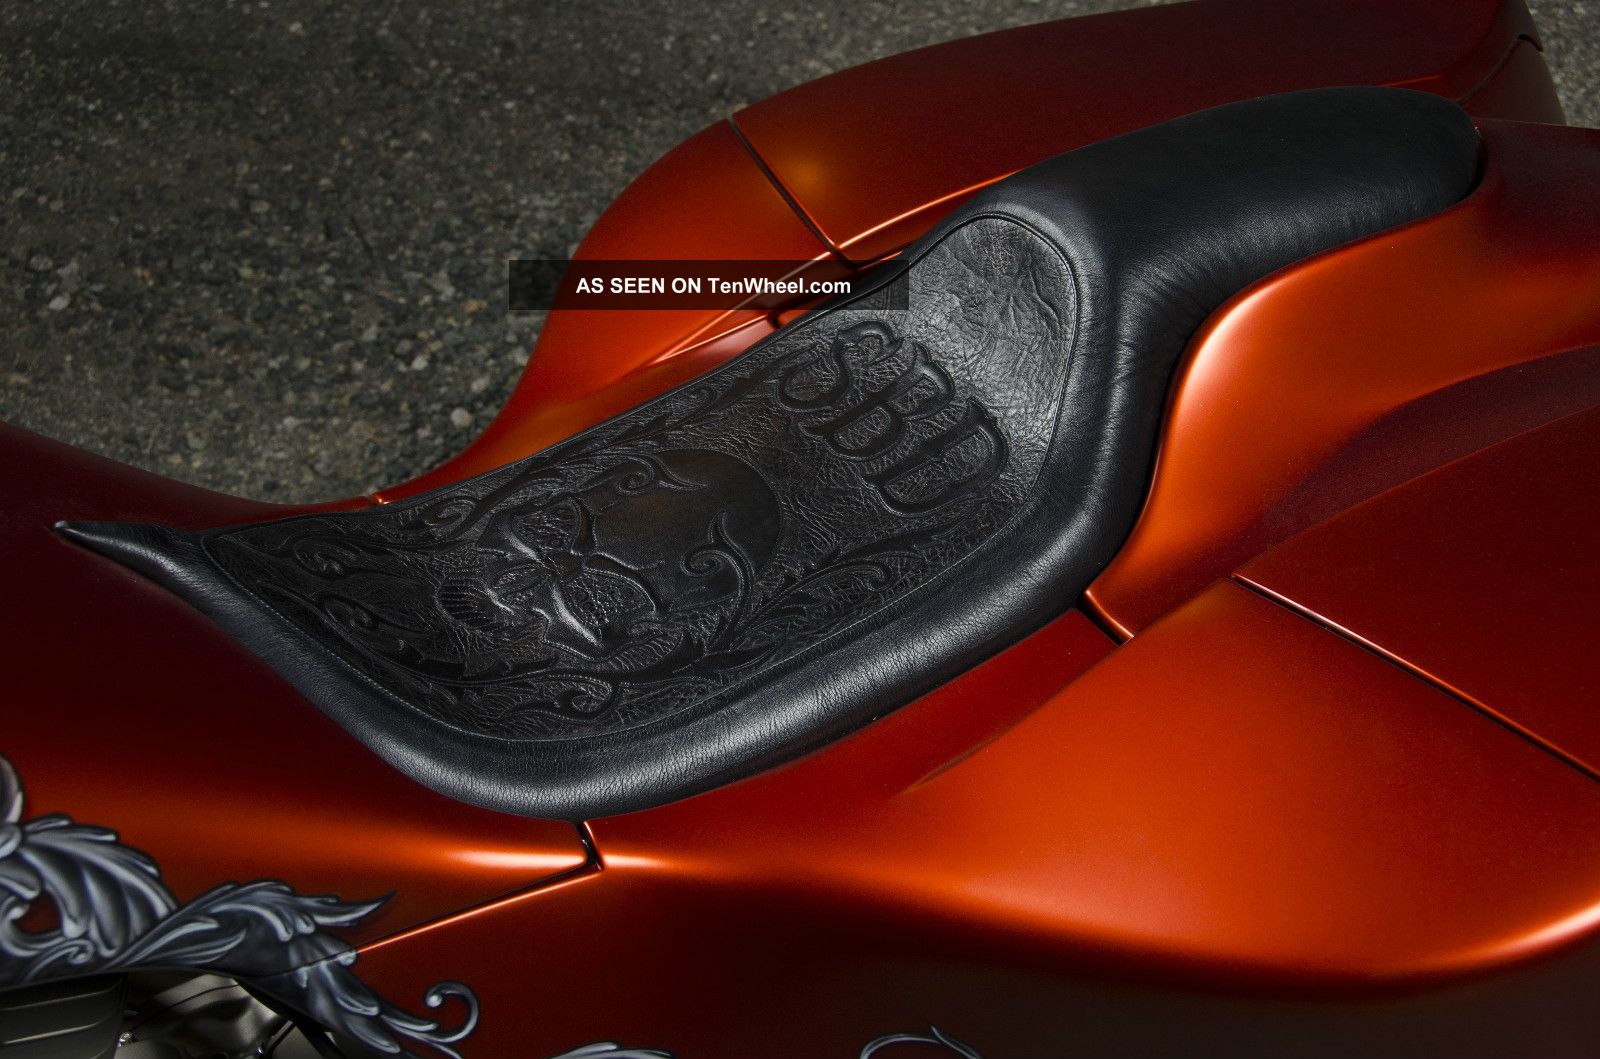 2012 Custom Road Glide 30 &quot; Wheel By Speed By Design Custom Bagger